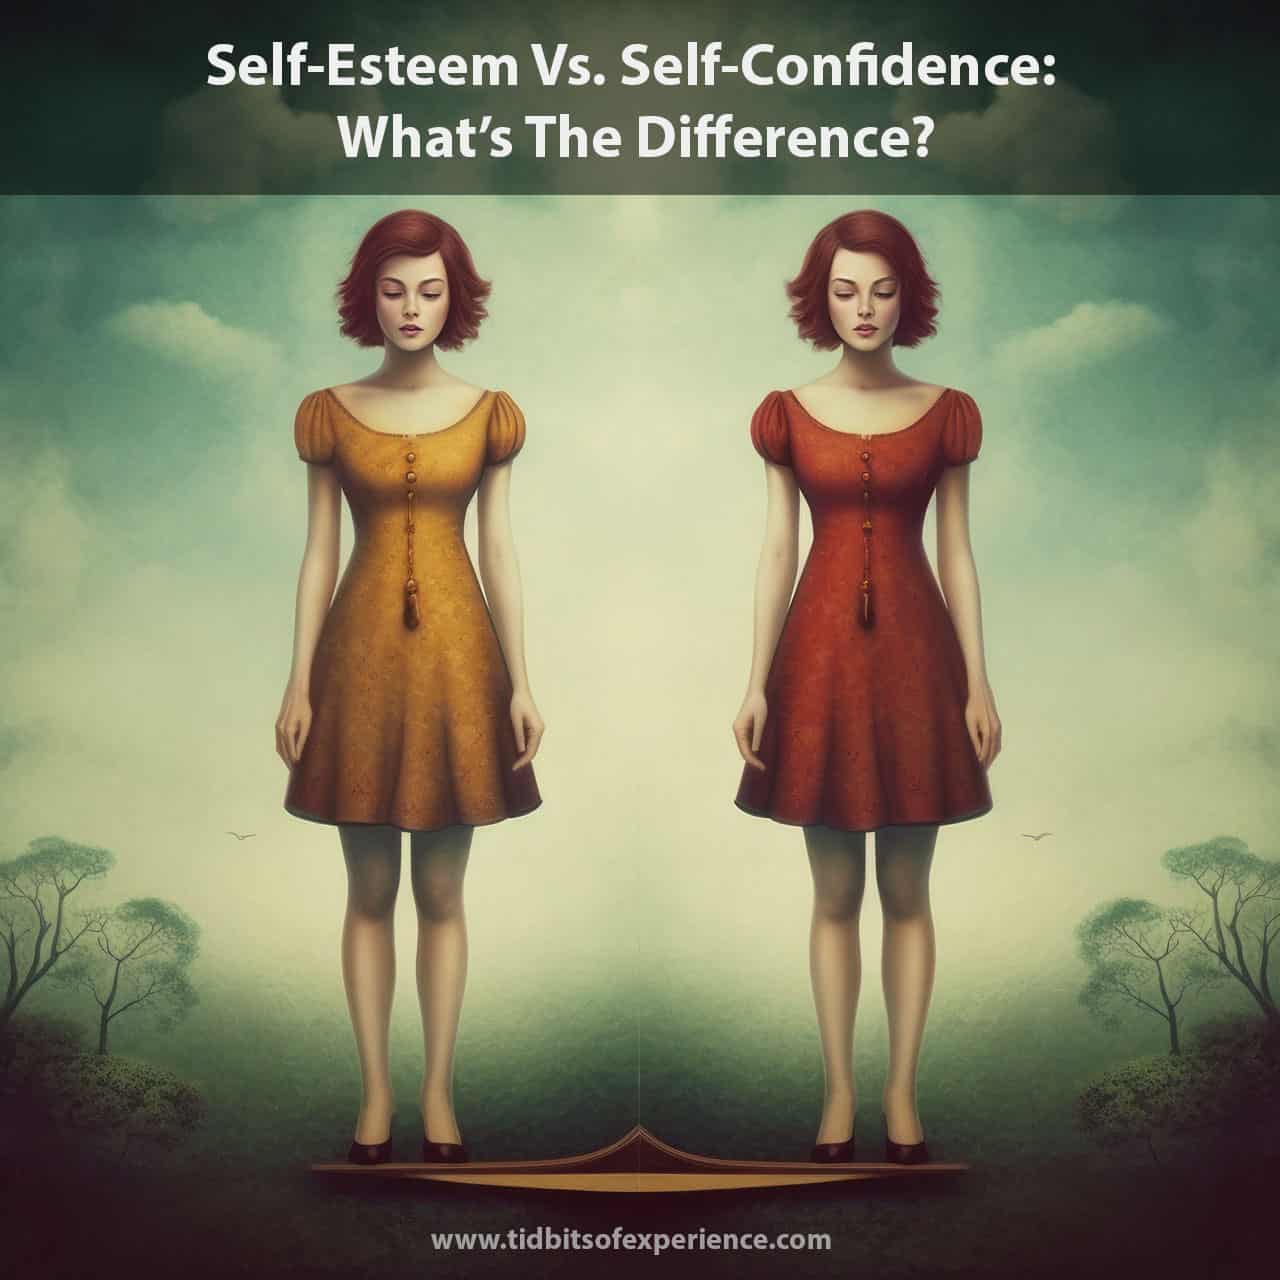 Self-Esteem Vs. Self-Confidence guide